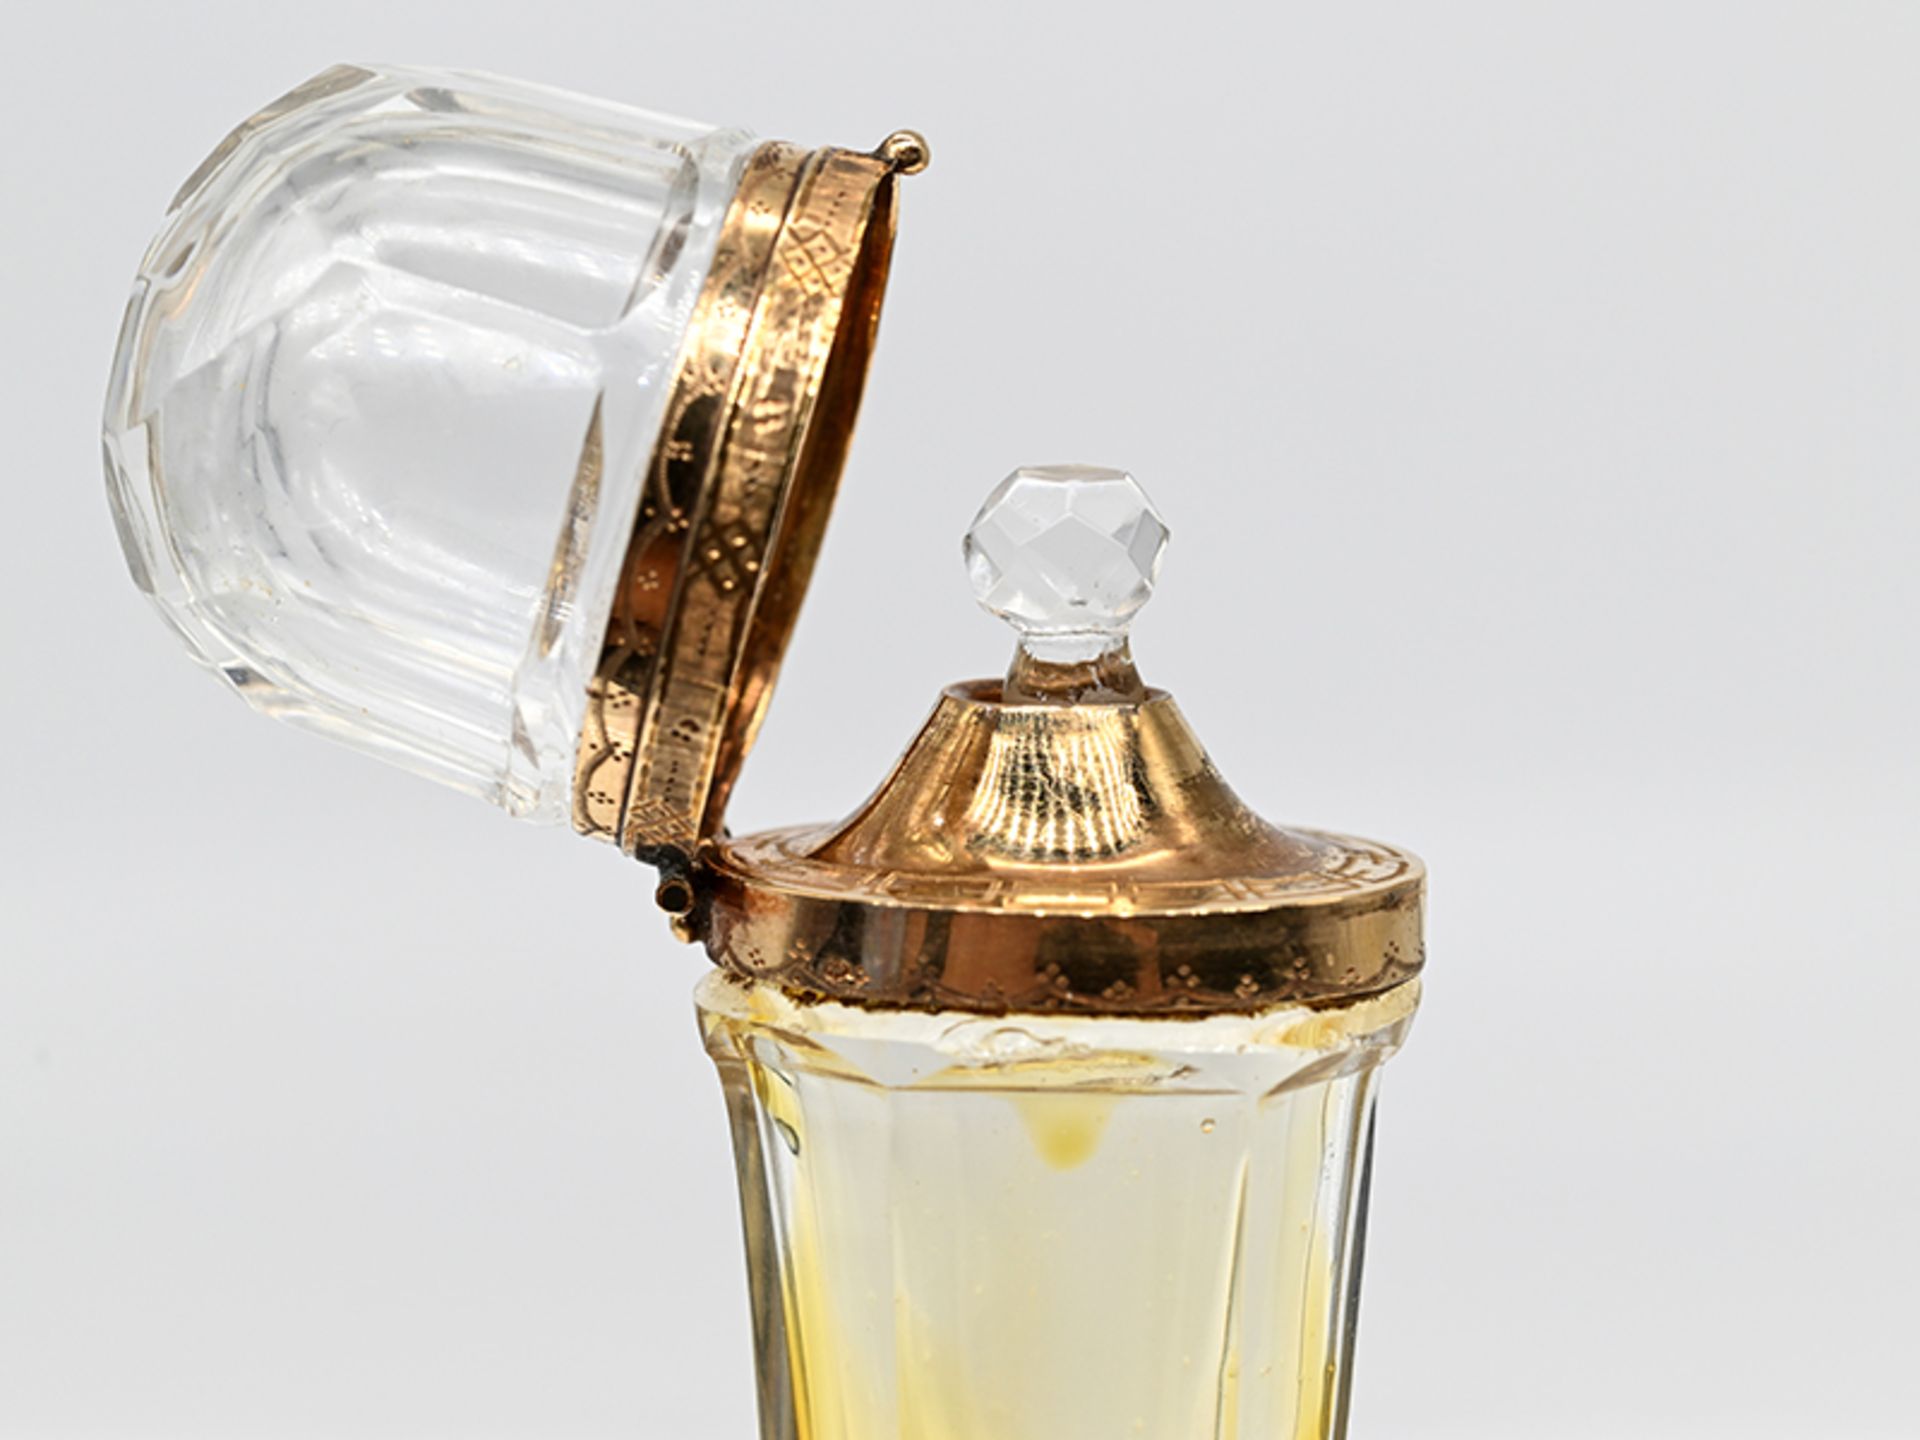 Parfum-Flakon, wohl Paris/Frankreich, 2. Hälfte 18. oder 19. Jh. - Image 5 of 8